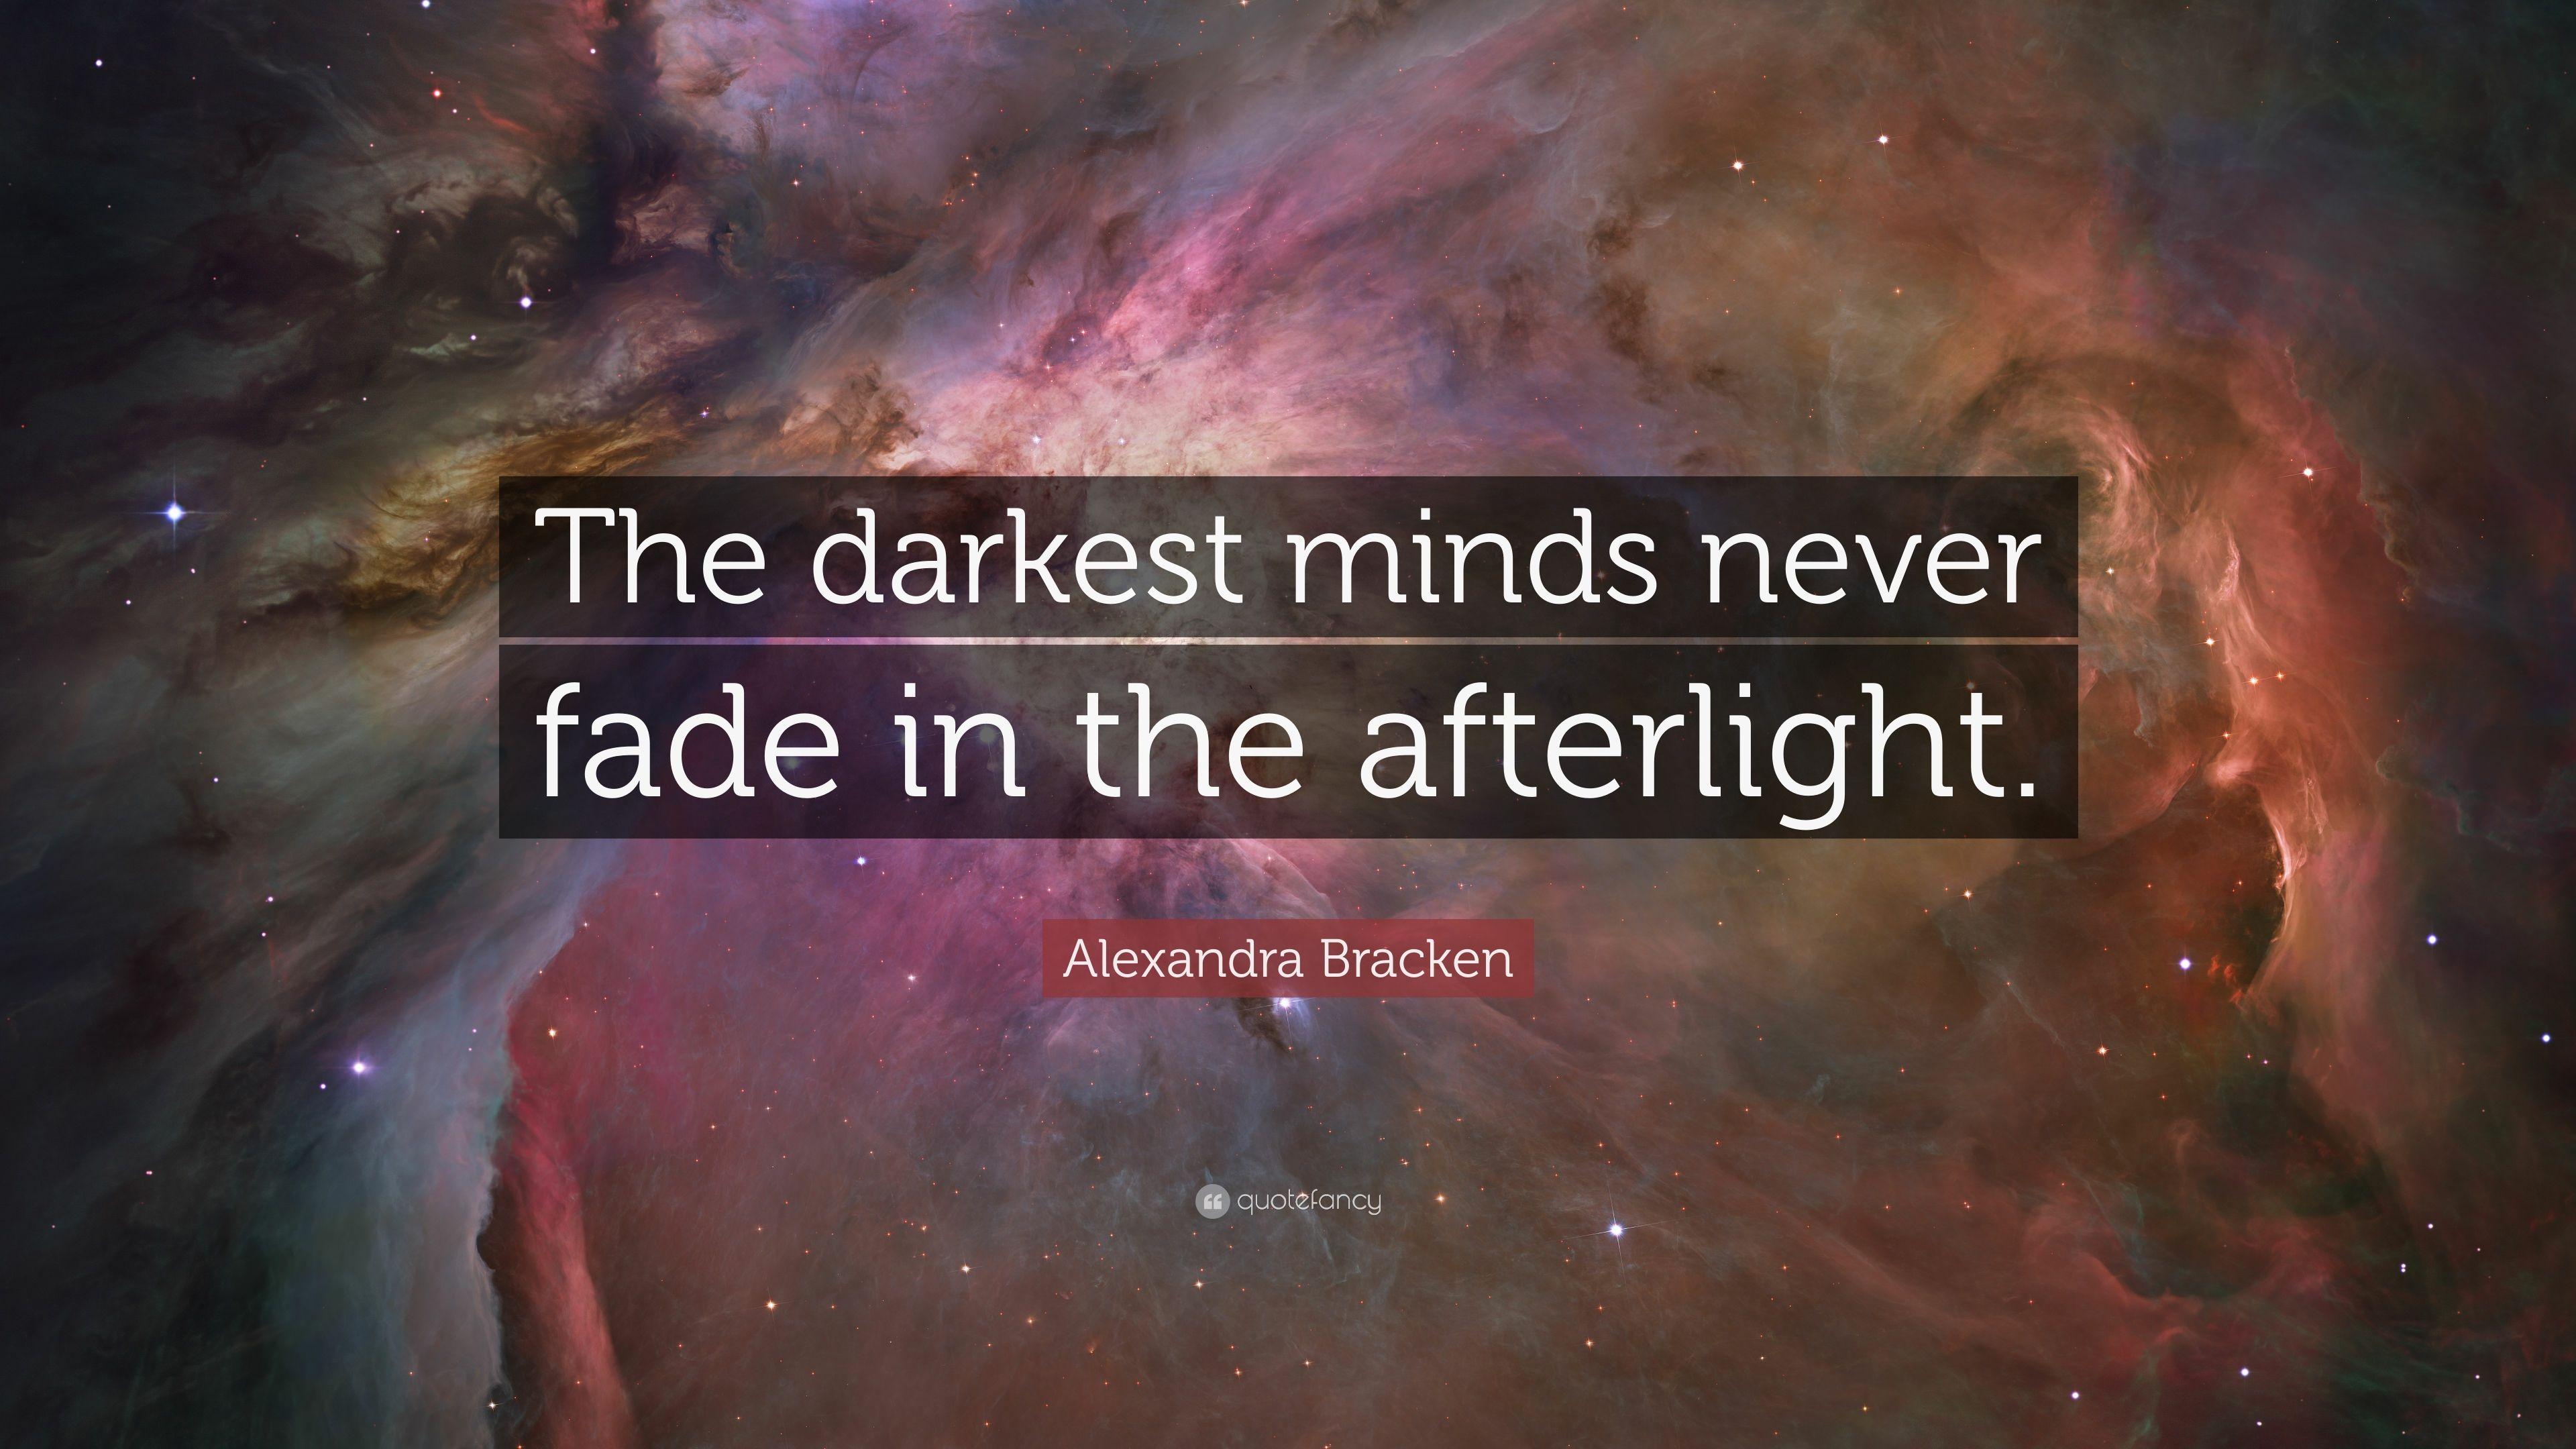 Alexandra Bracken Quote: “The darkest minds never fade in